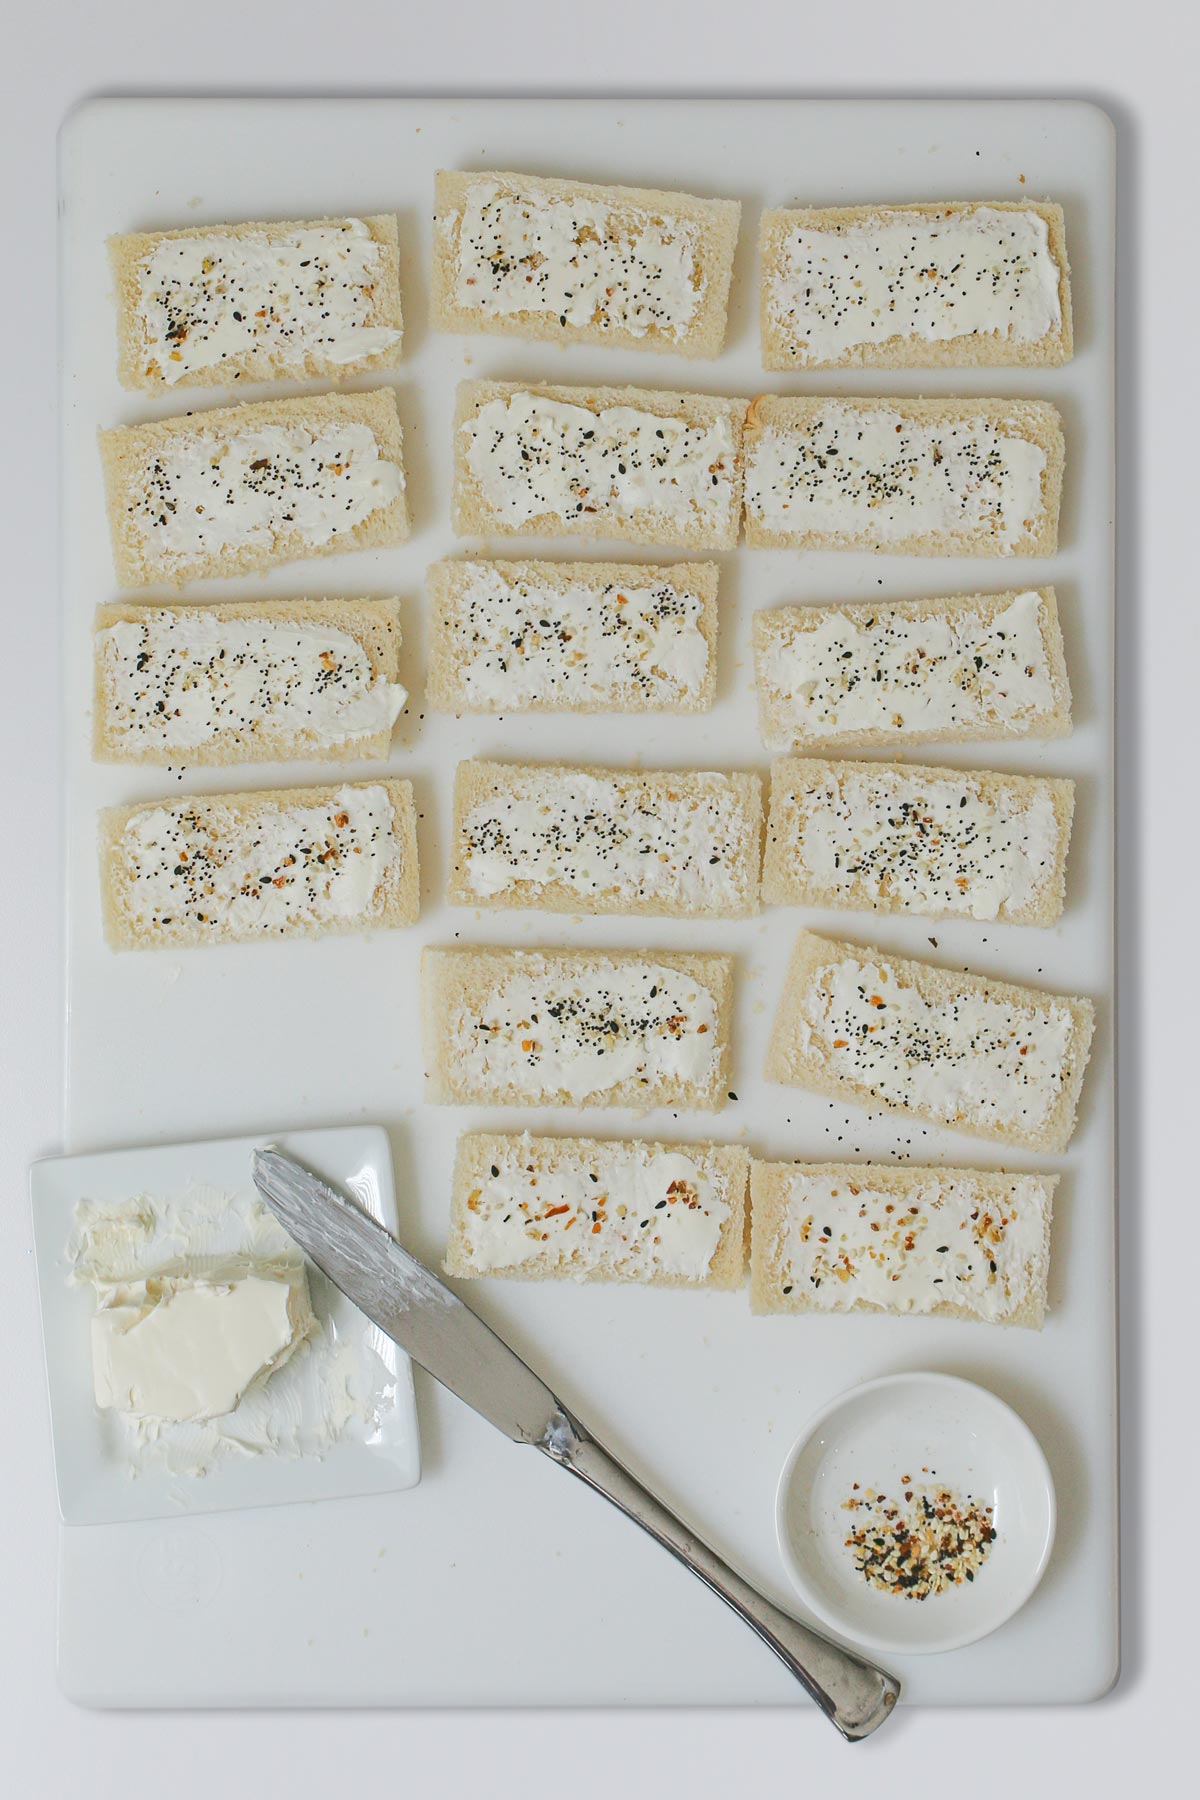 cream cheese spread on bread slices on board.